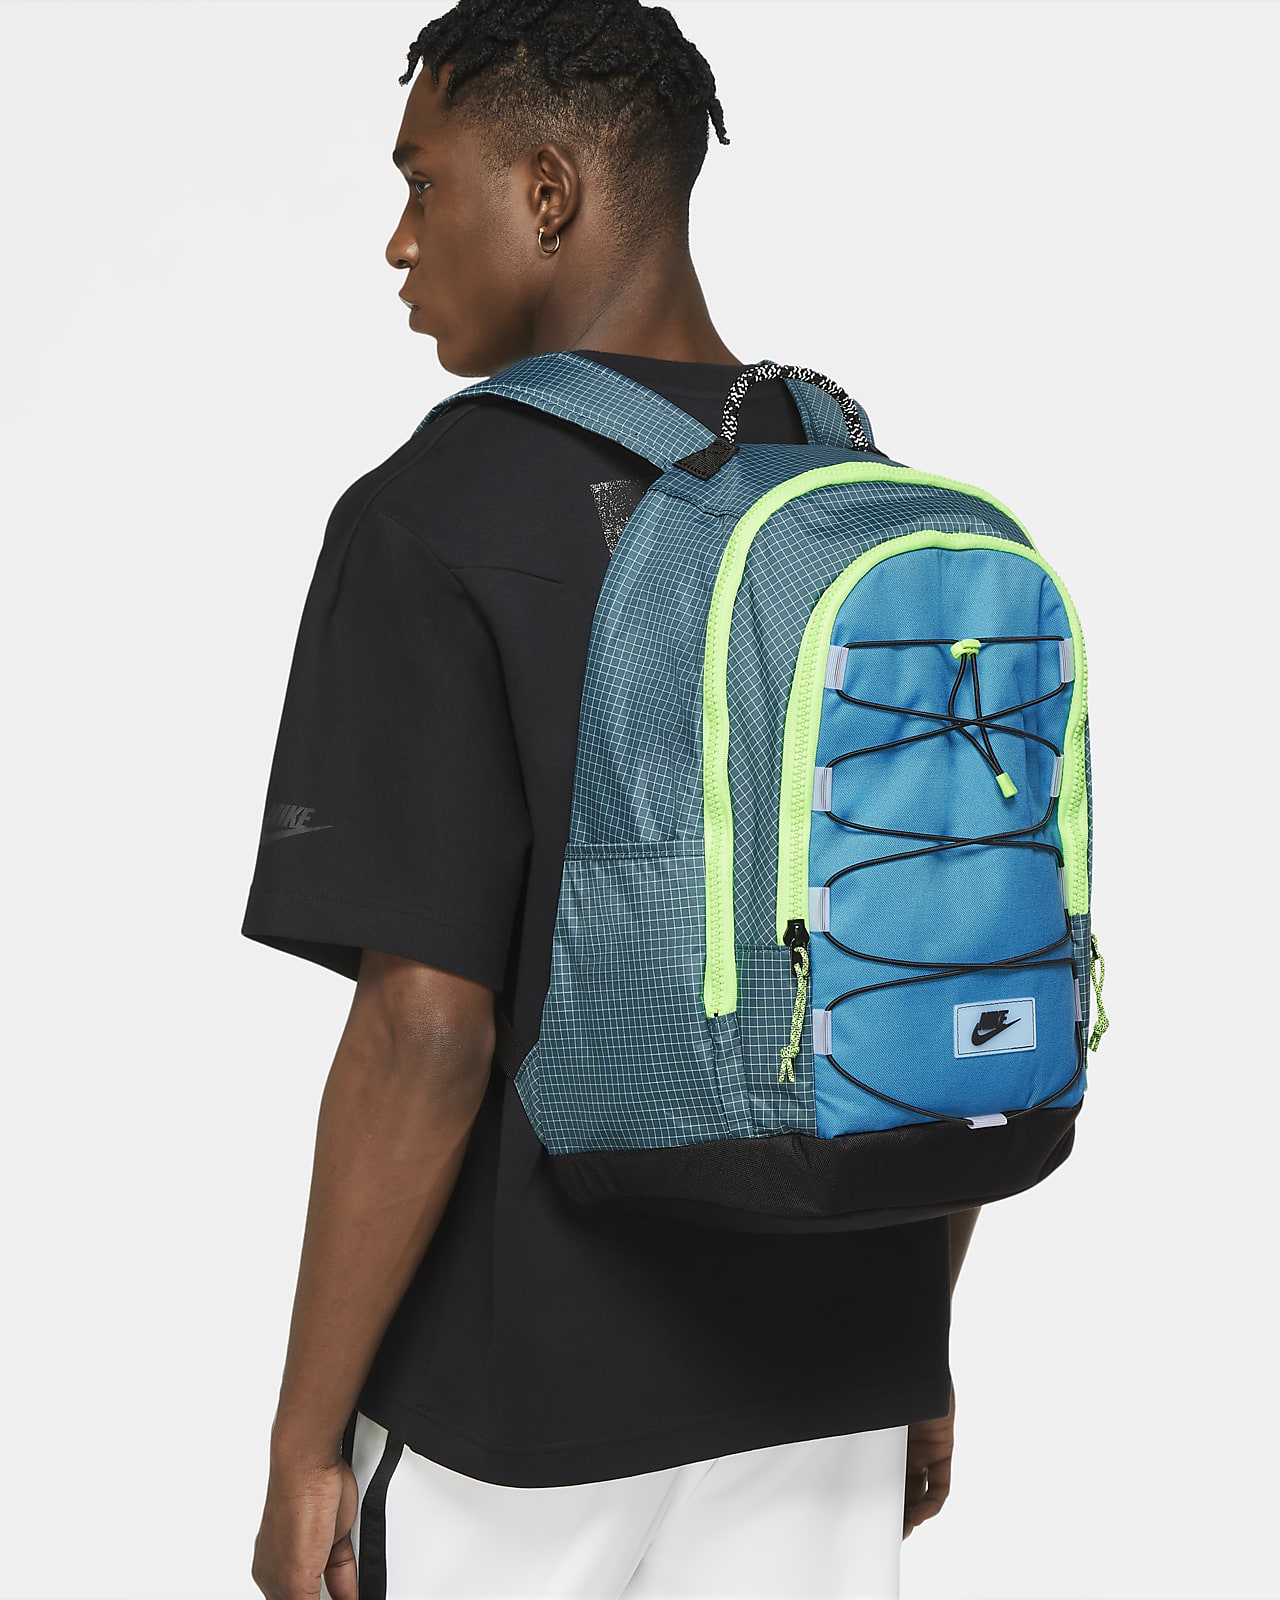 nike hayward backpack